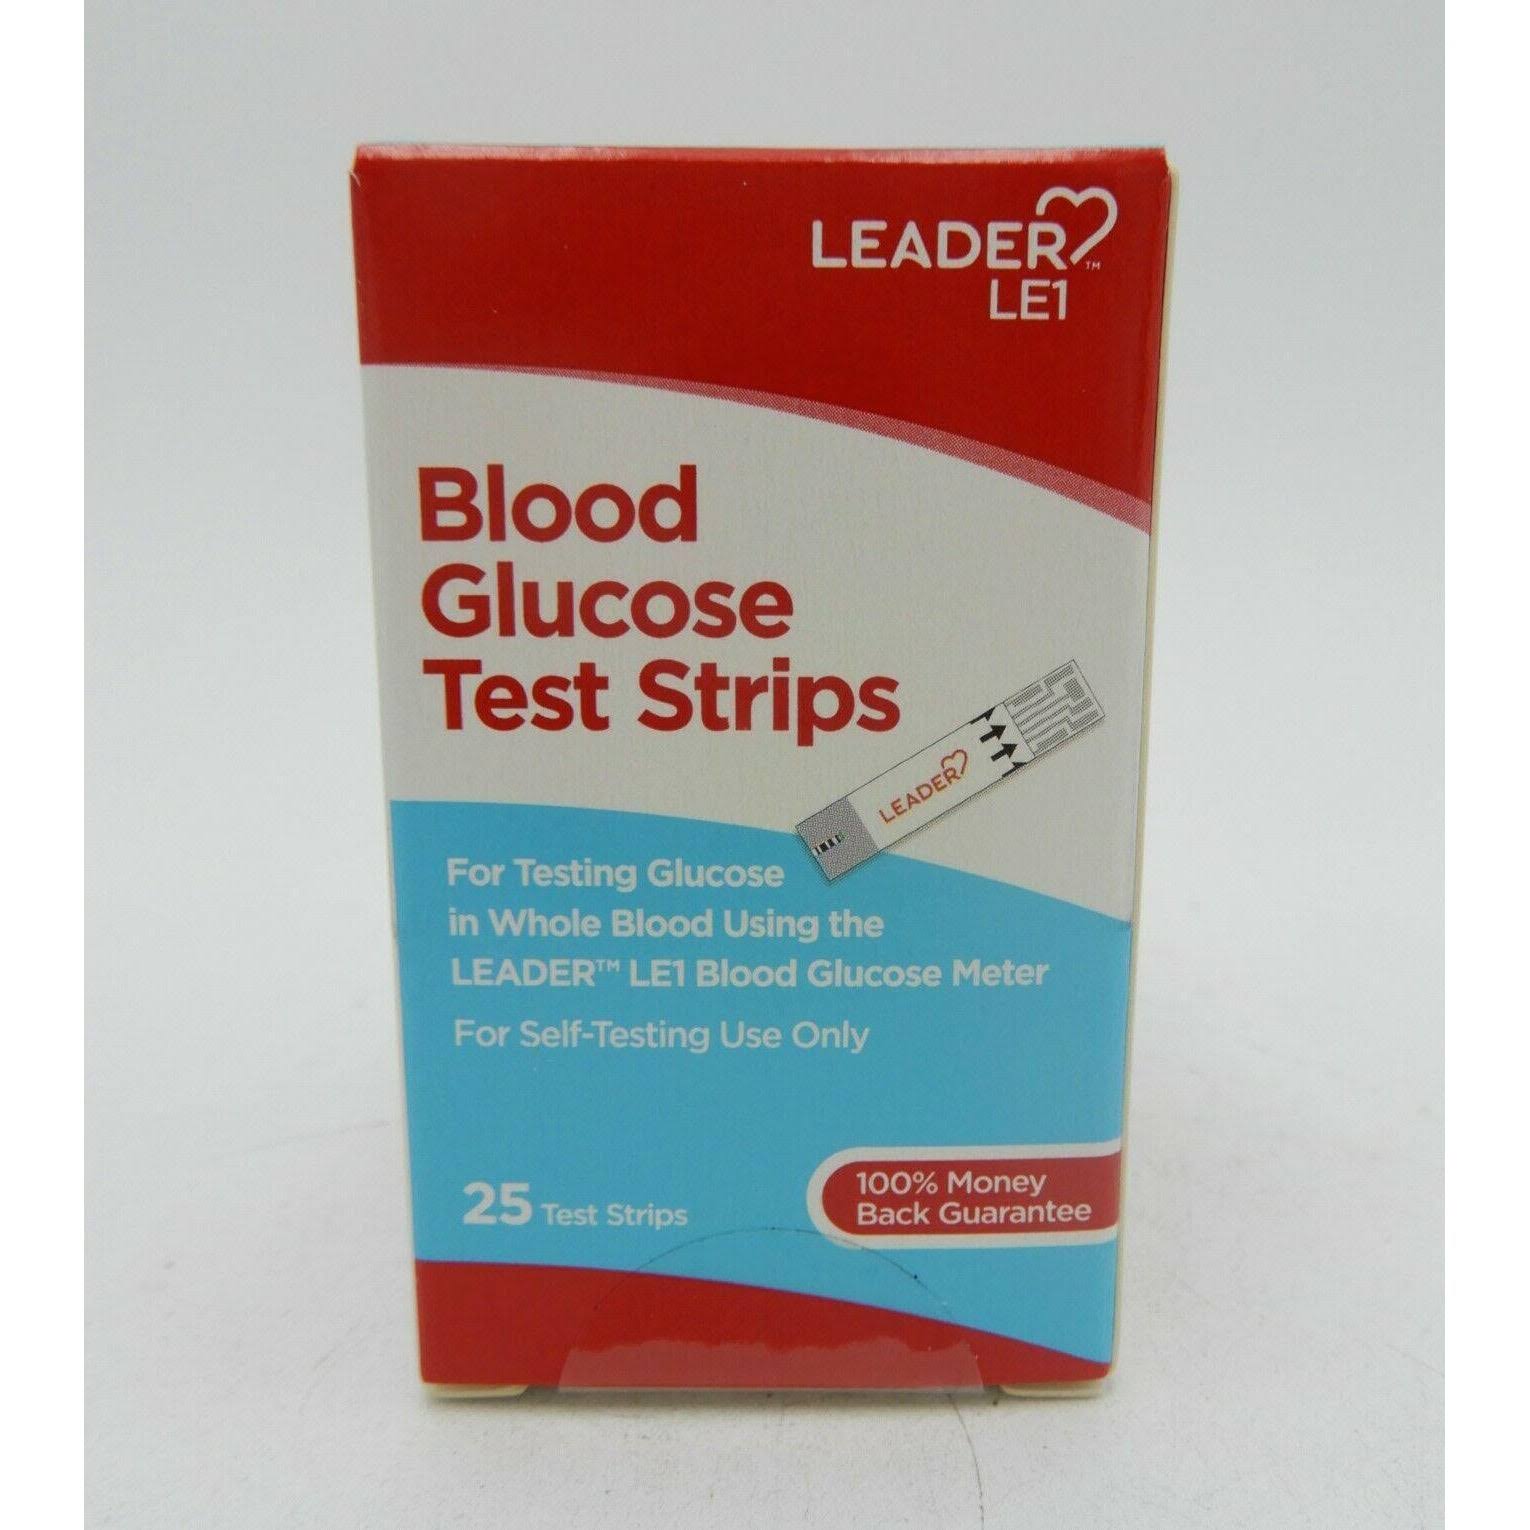 Leader Blood Glucose Test Strips, 25 Count